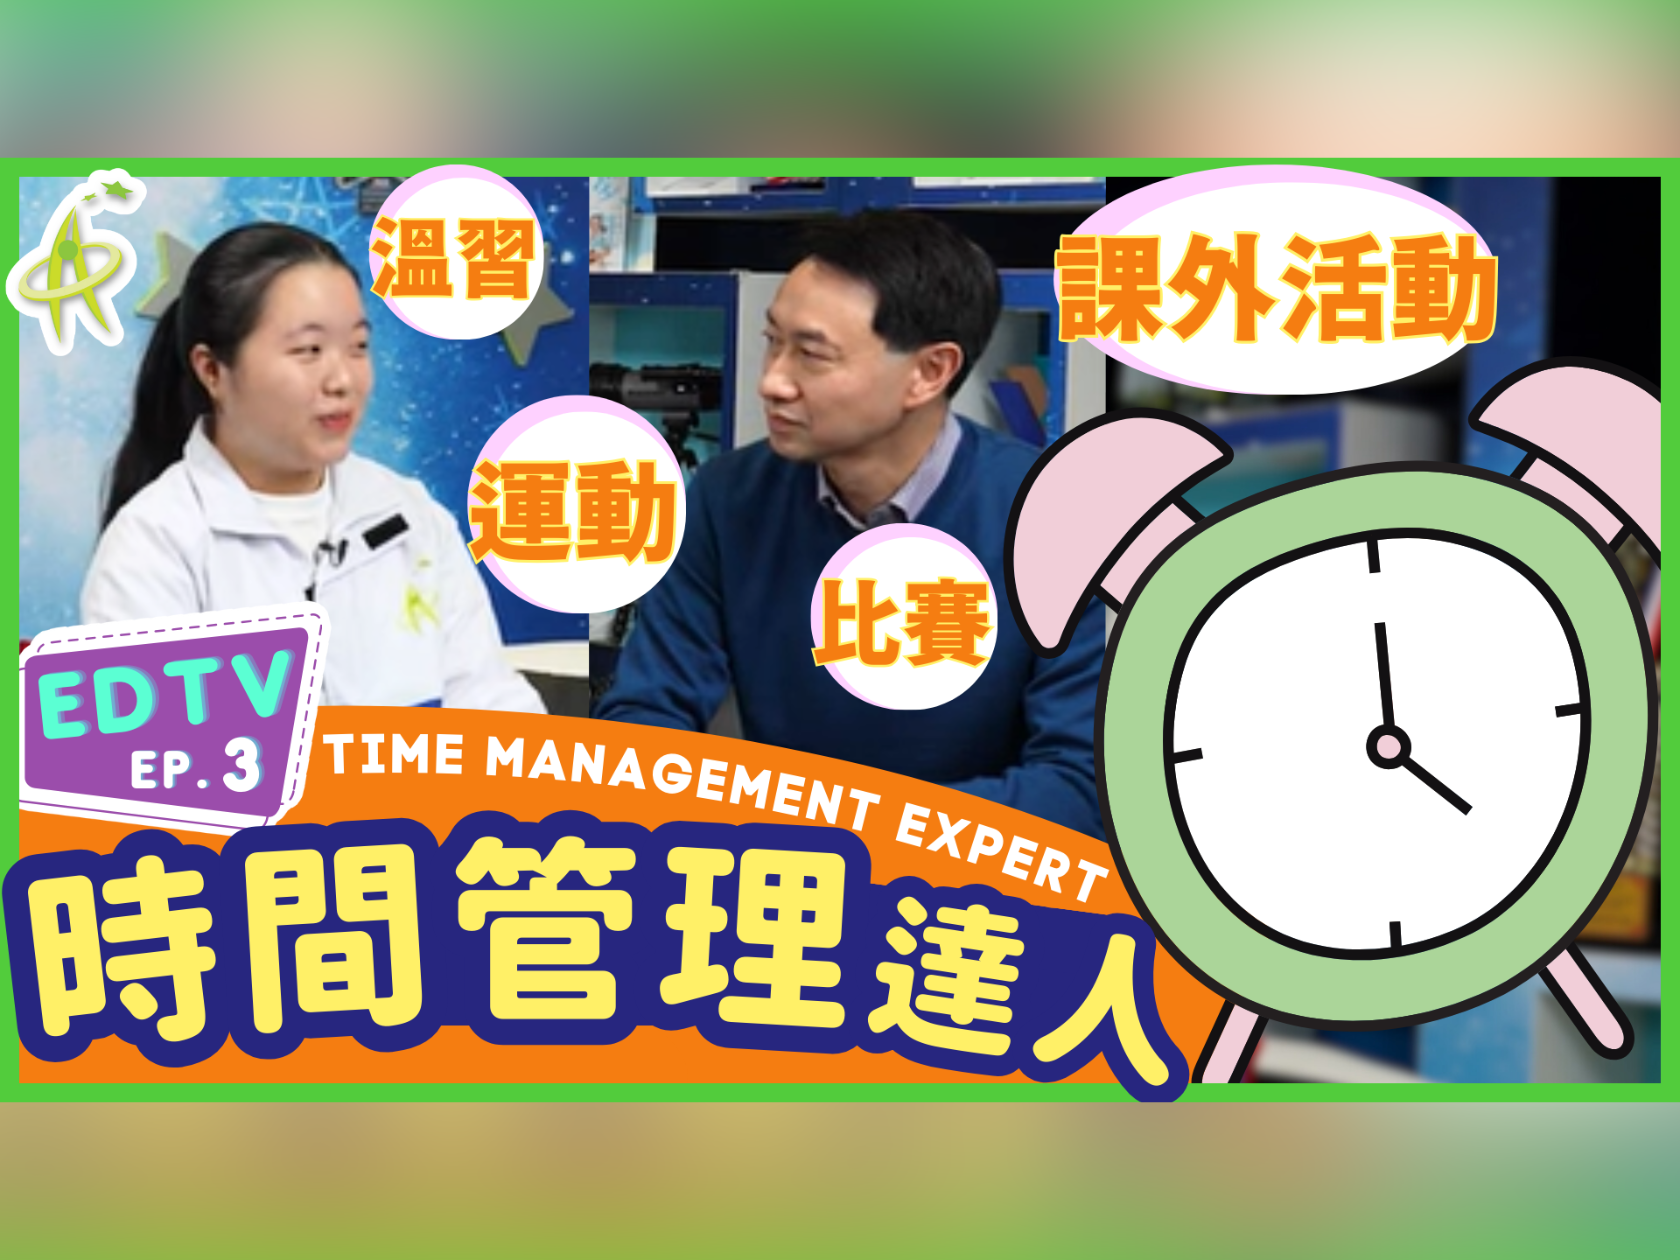 【EDTV EP3】Time Management Expert